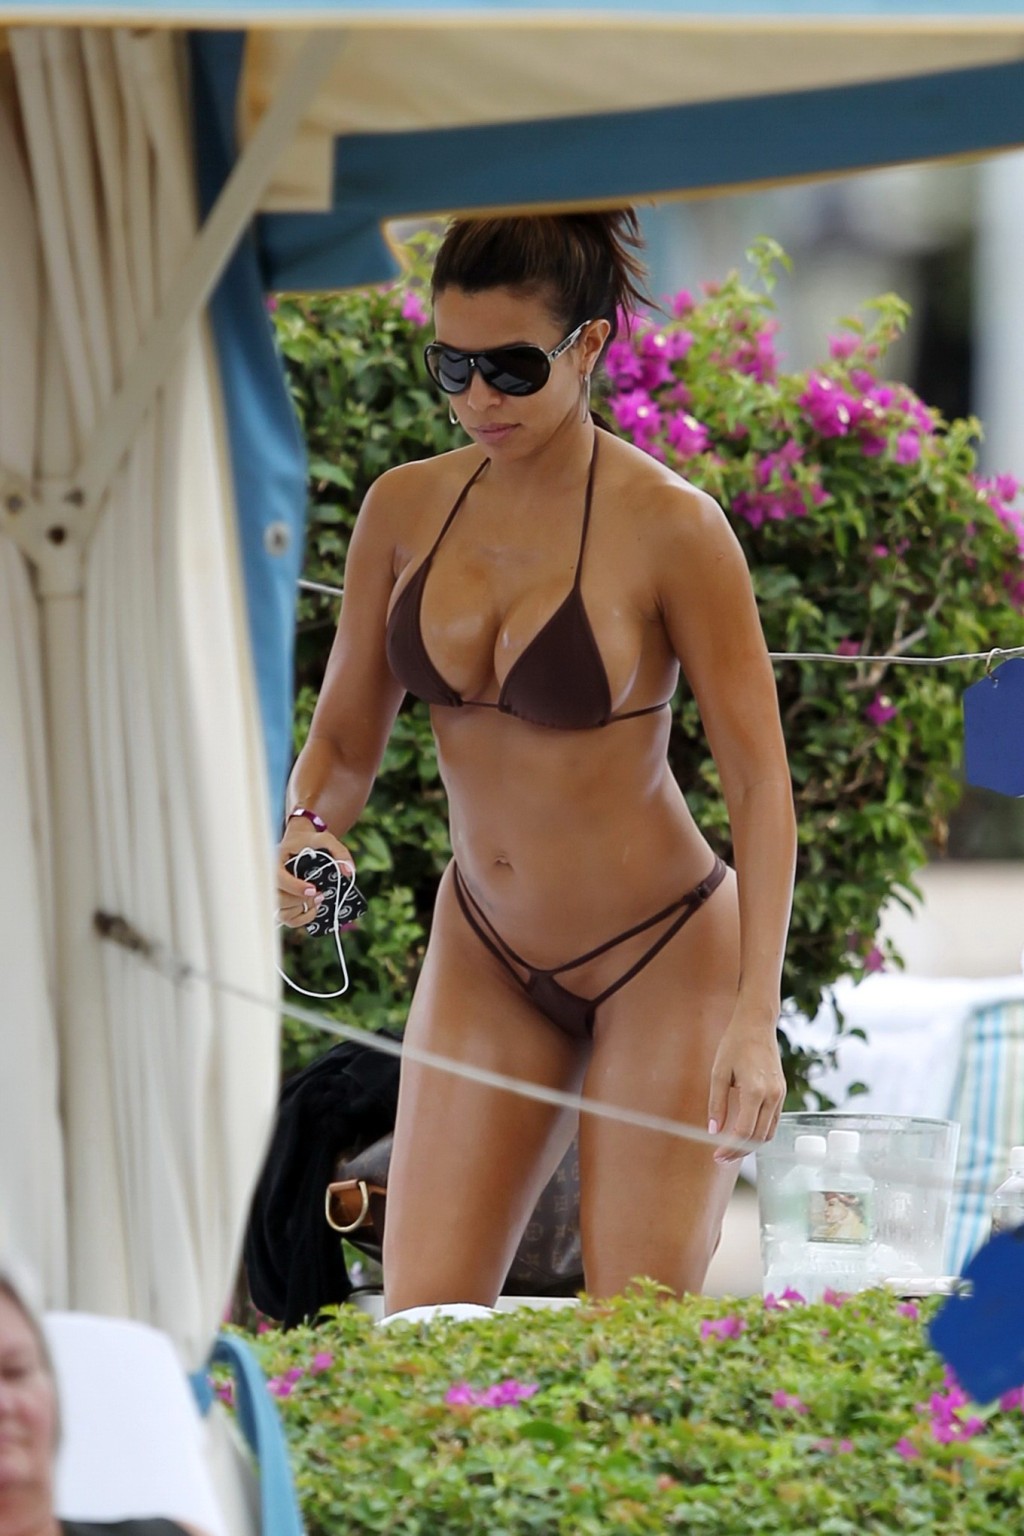 Vida Guerra showing off her curvy bikini body poolside in Hawaii #75244735